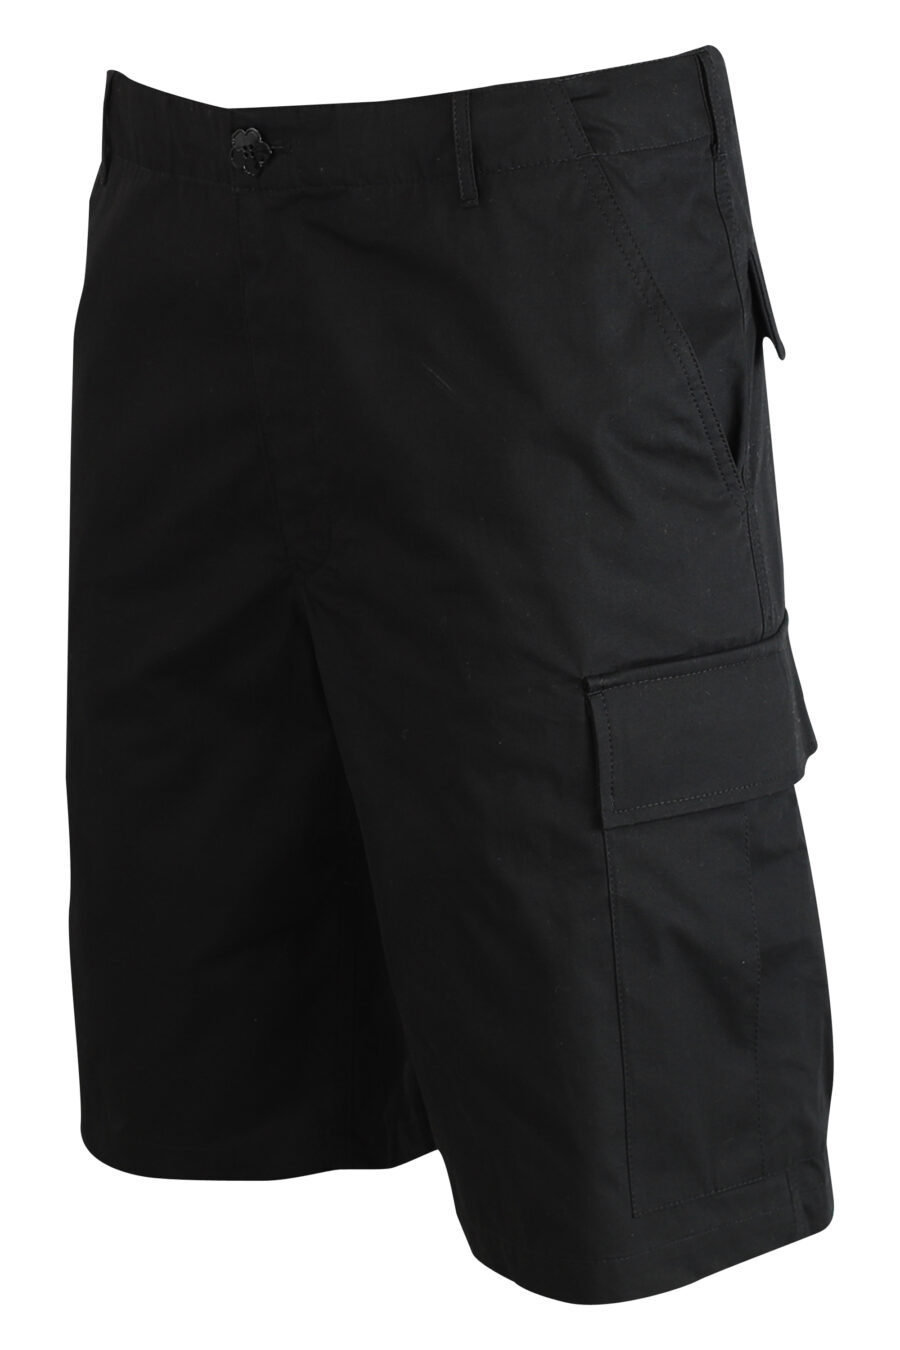 Pantalón negro corto estilo cargo - 3612230420502 2